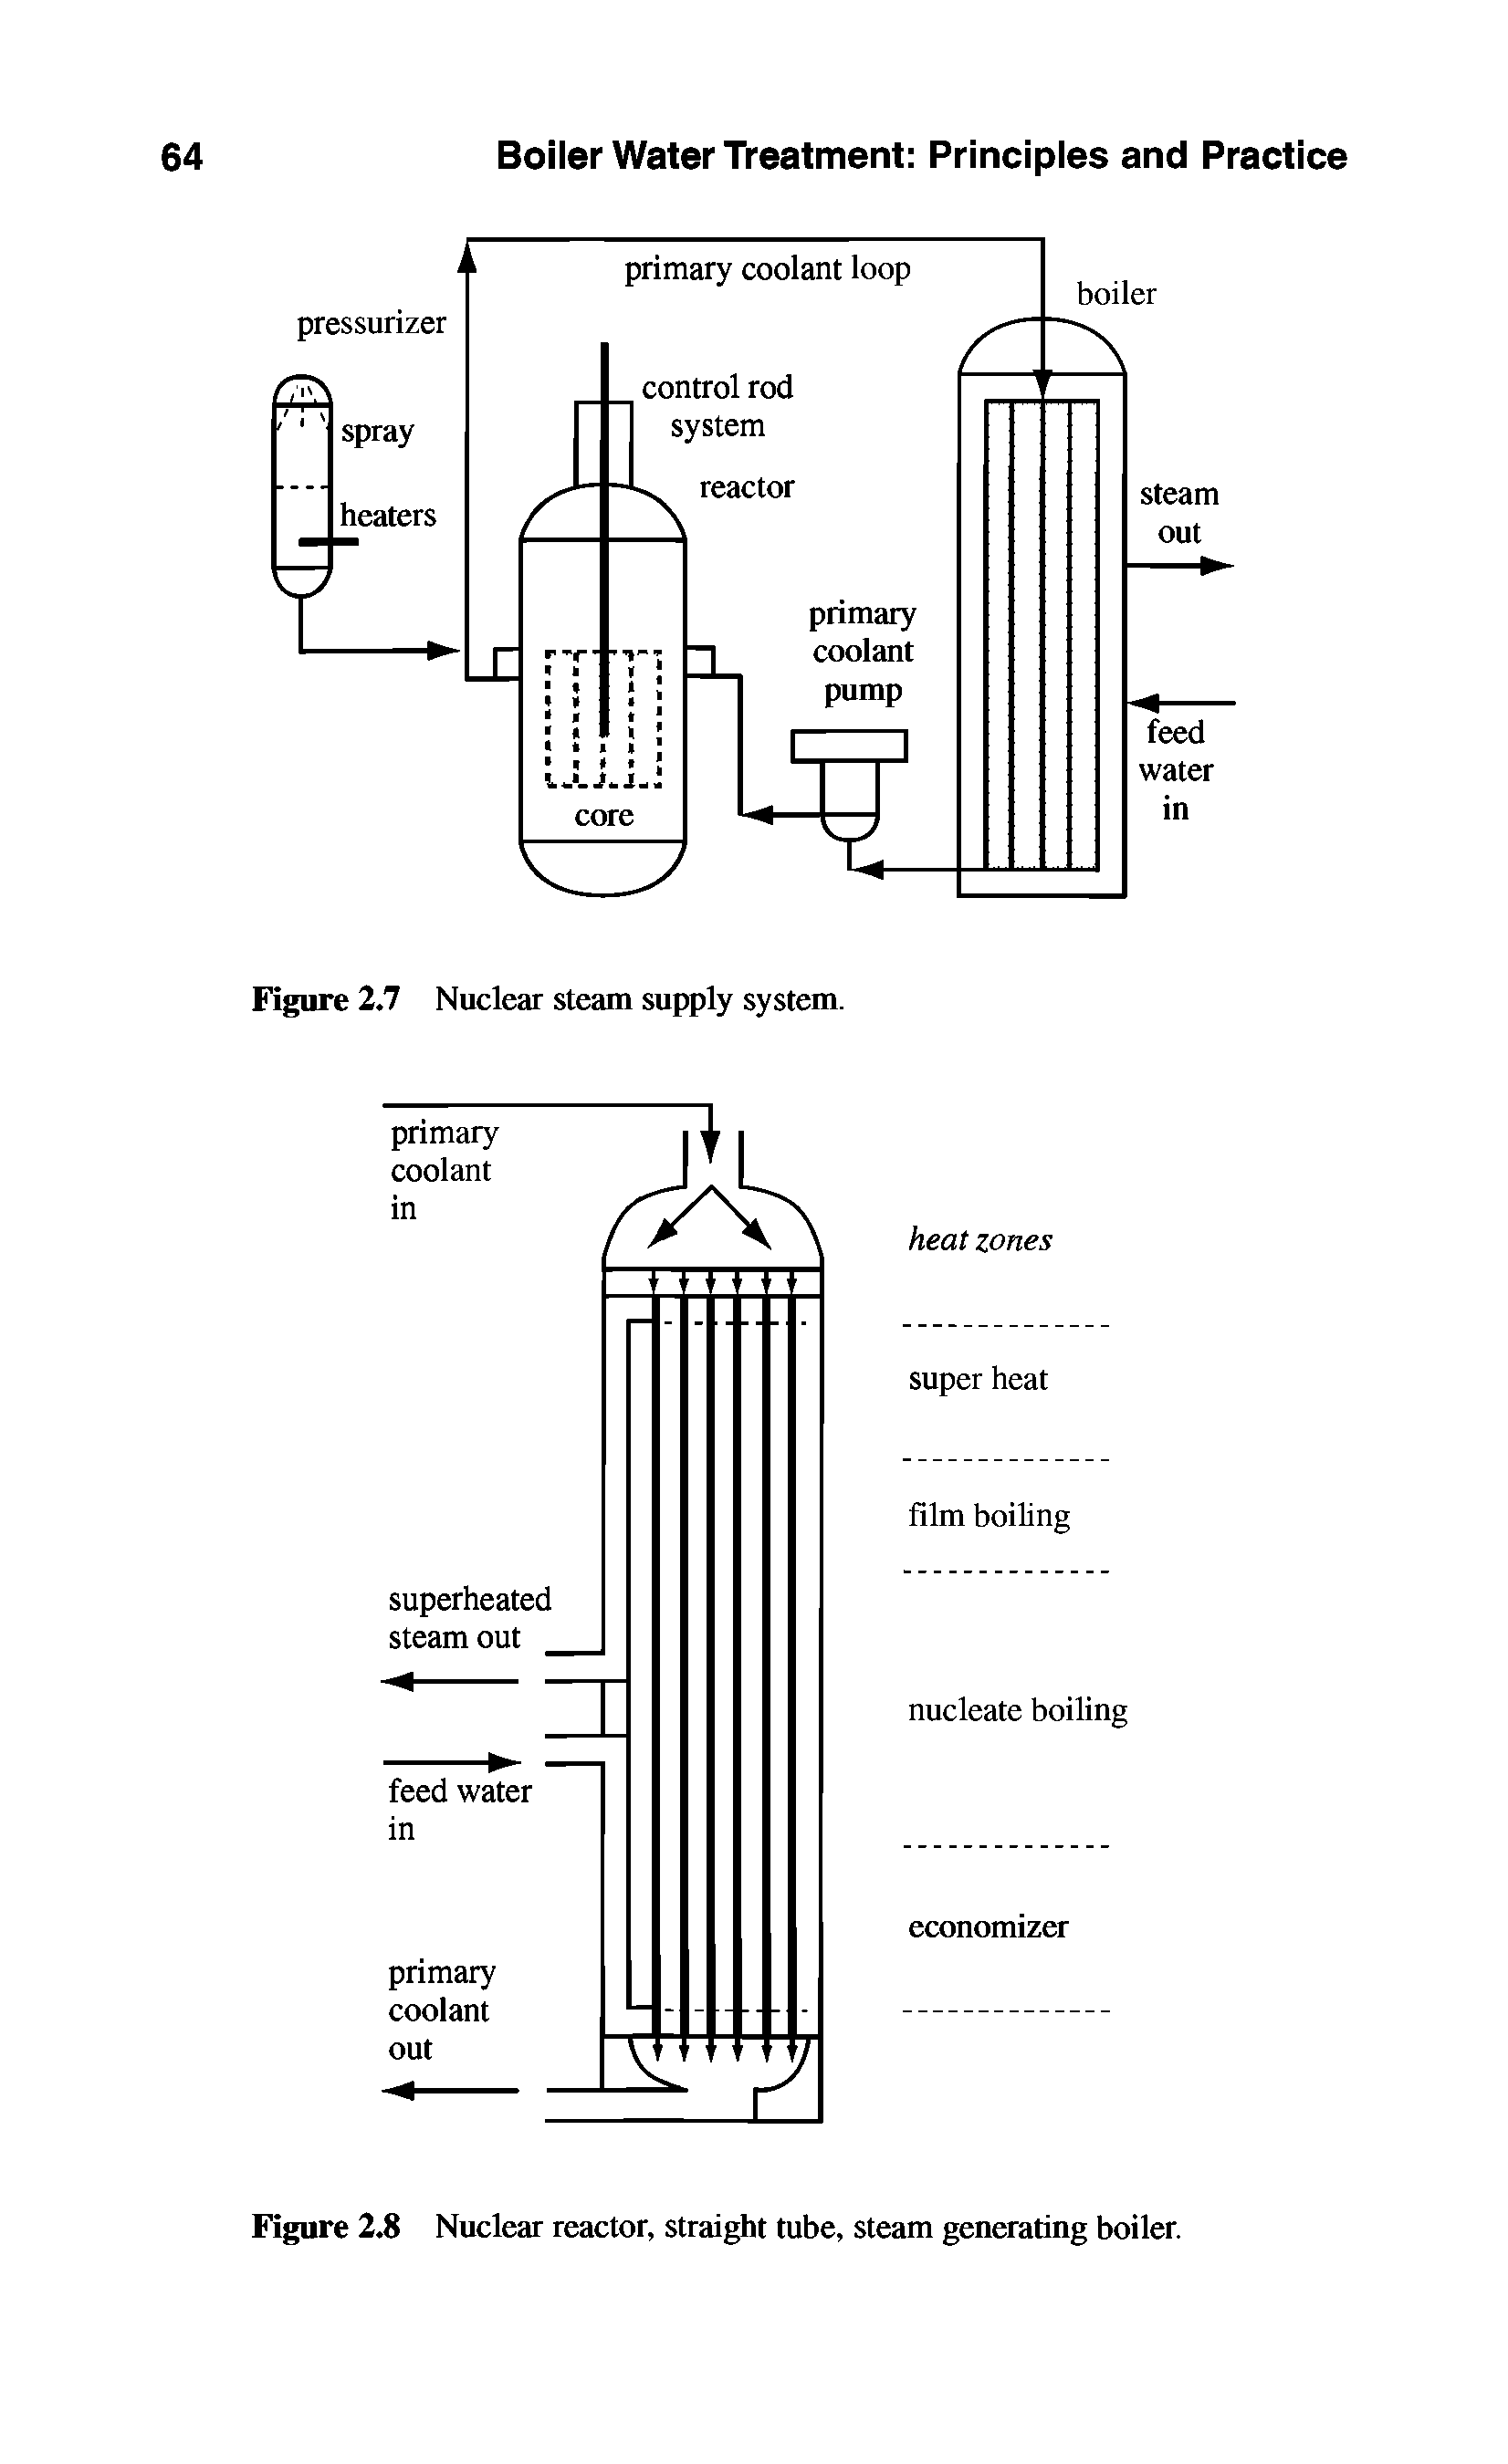 Figure 2.8 Nuclear reactor, straight tube, steam generating boiler.